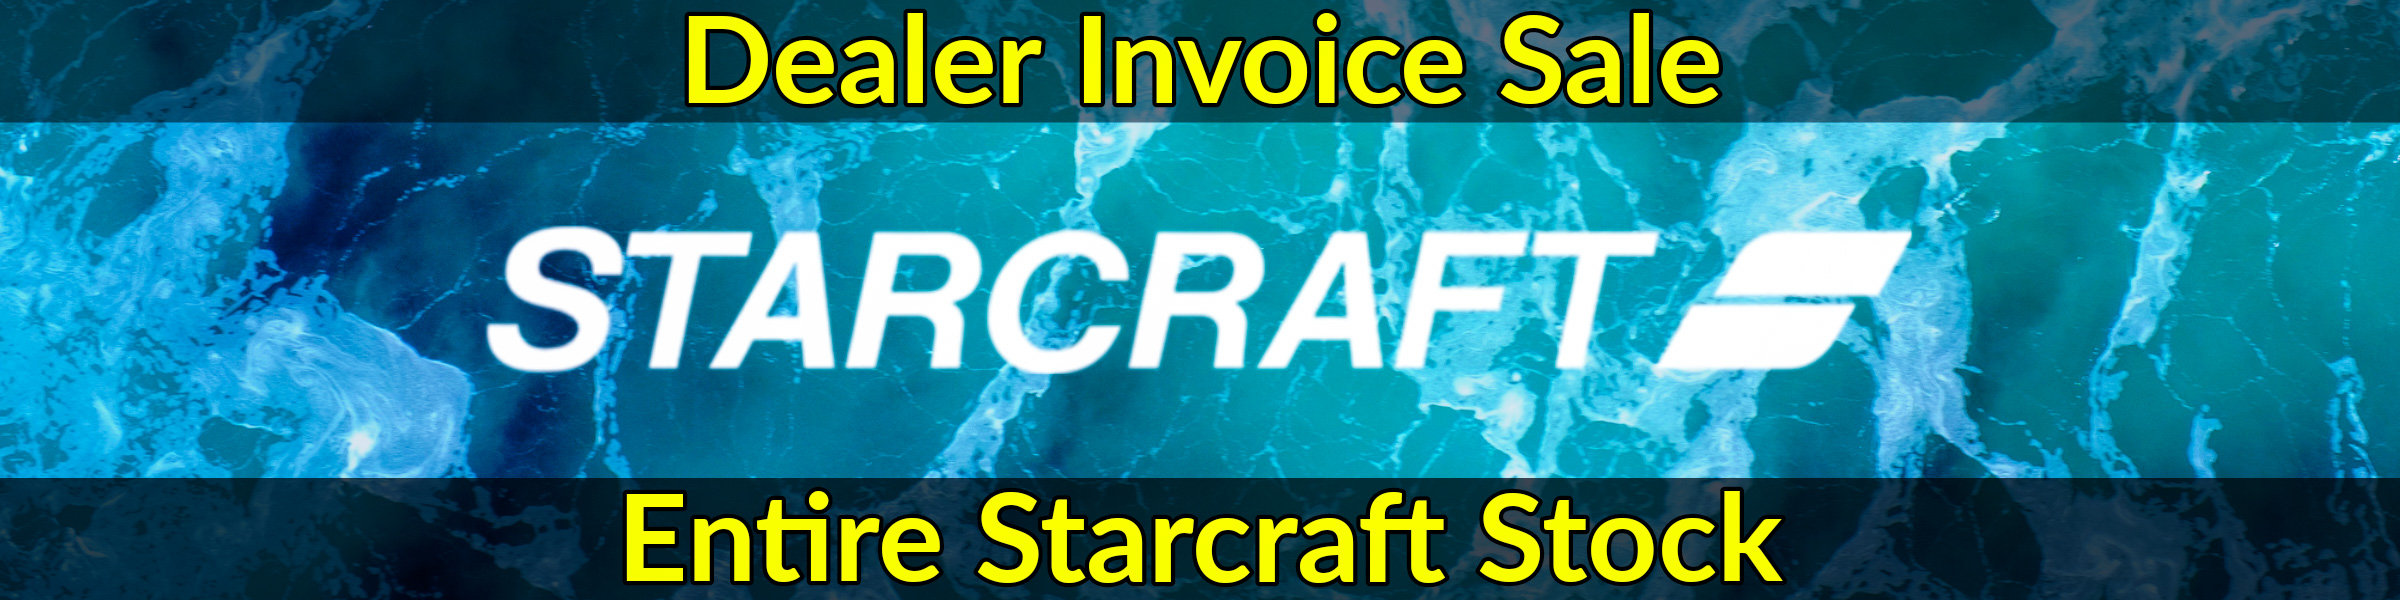 Starcraft Dealer Invoice Sale Banner Brand Page